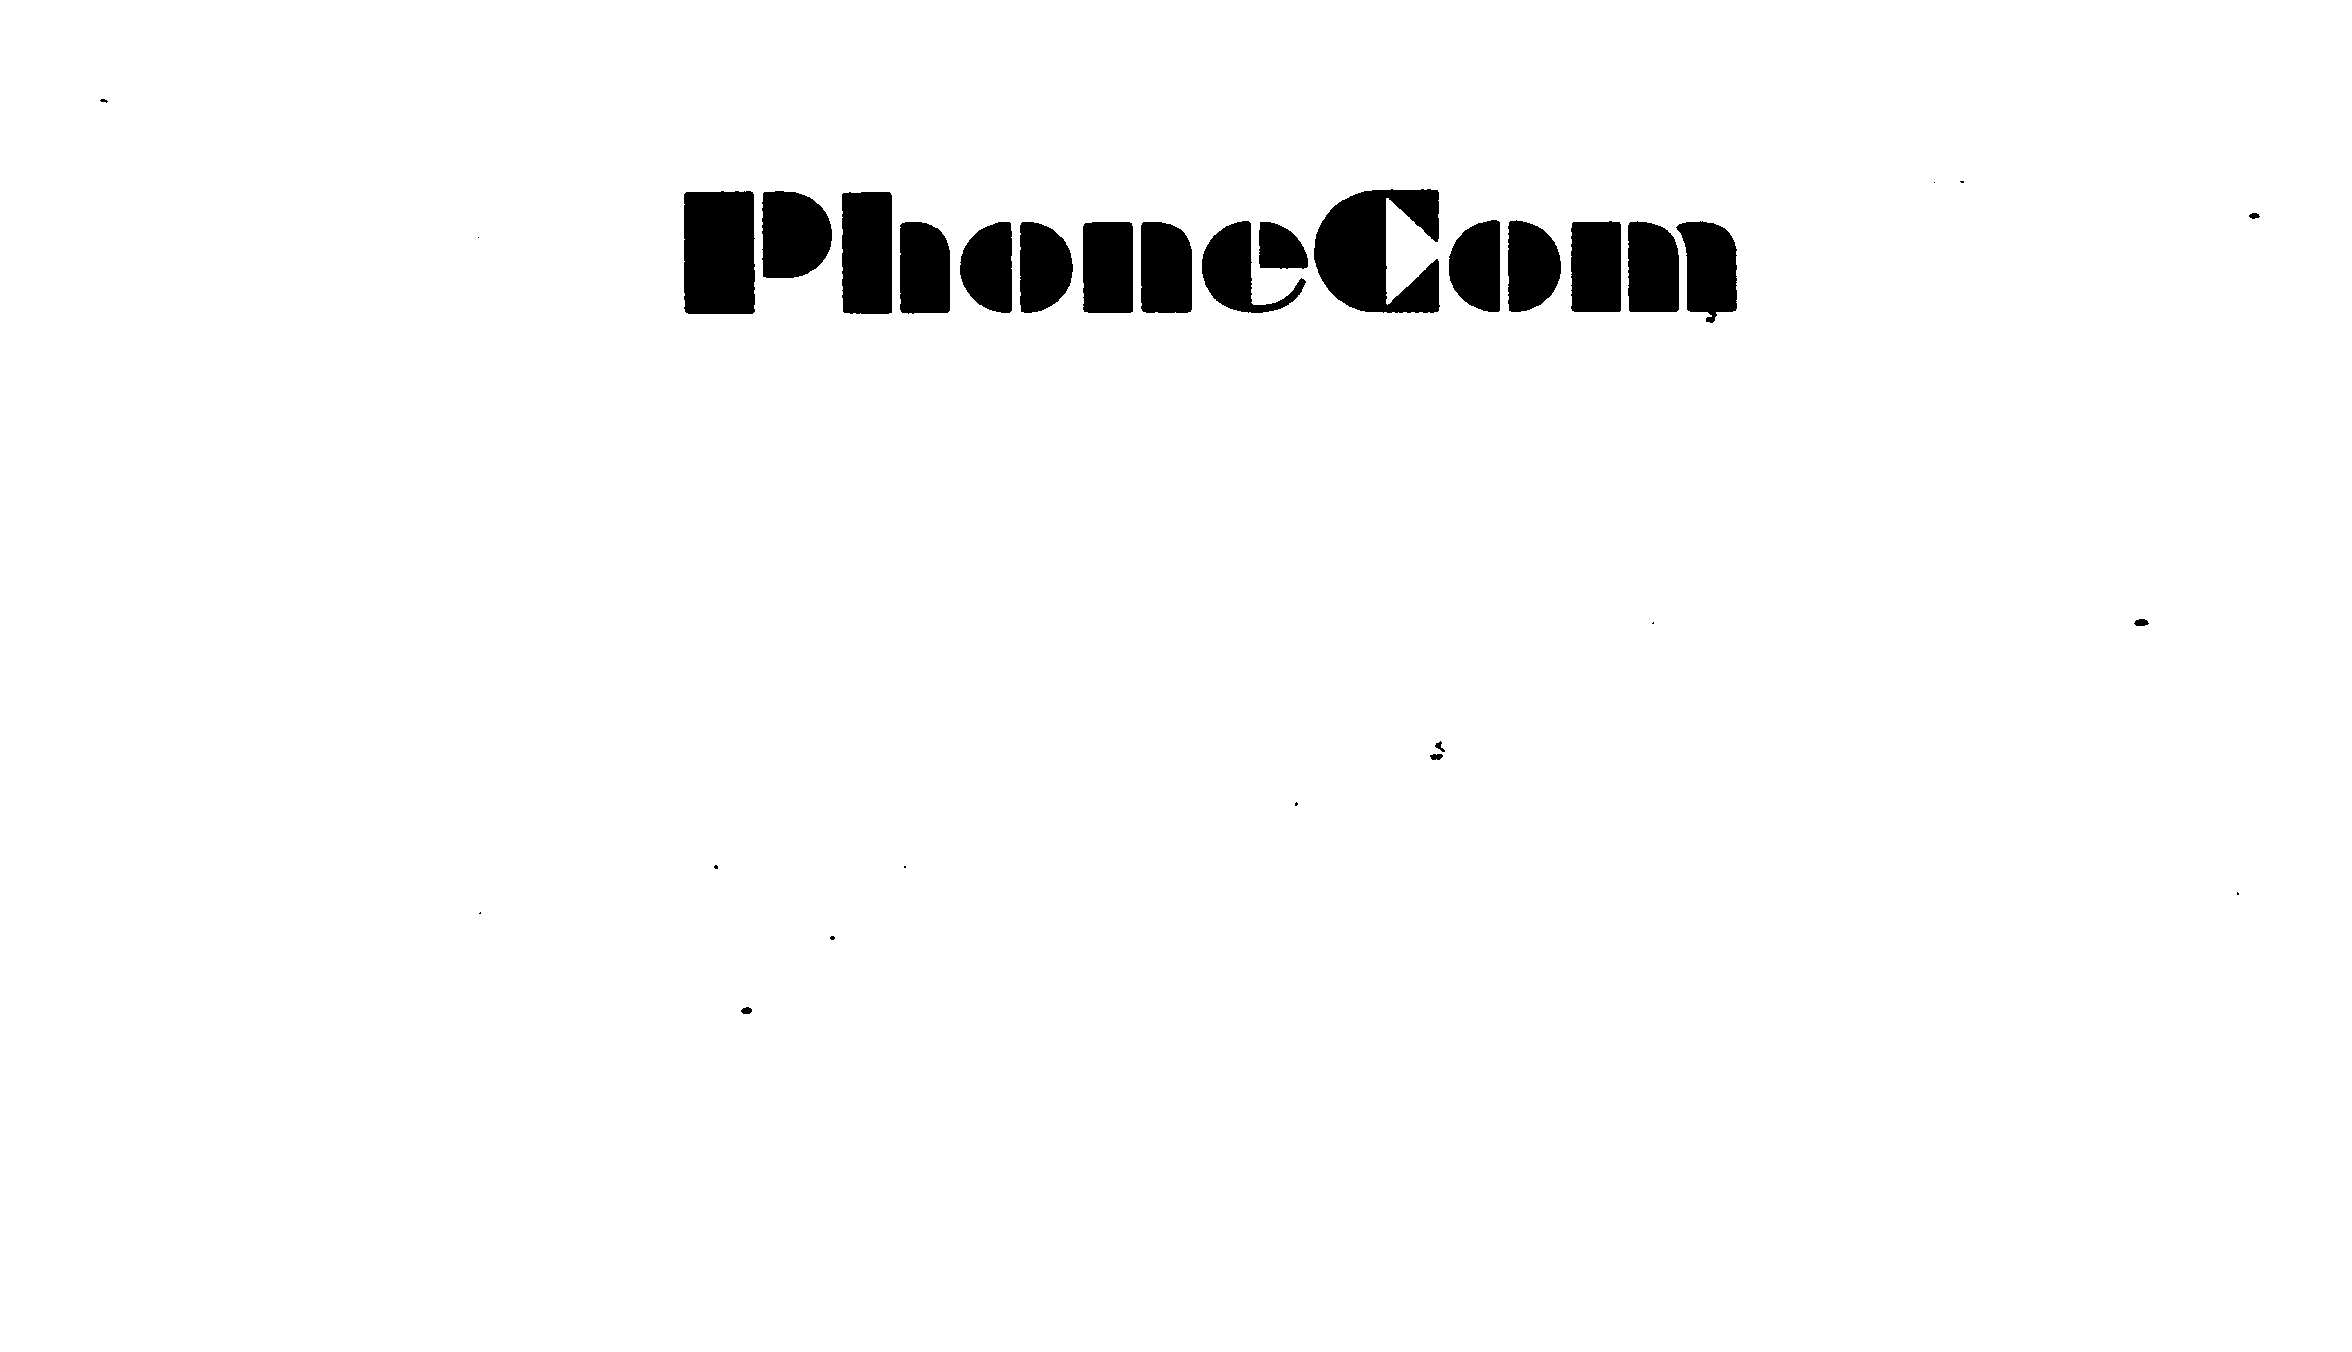  PHONECOM